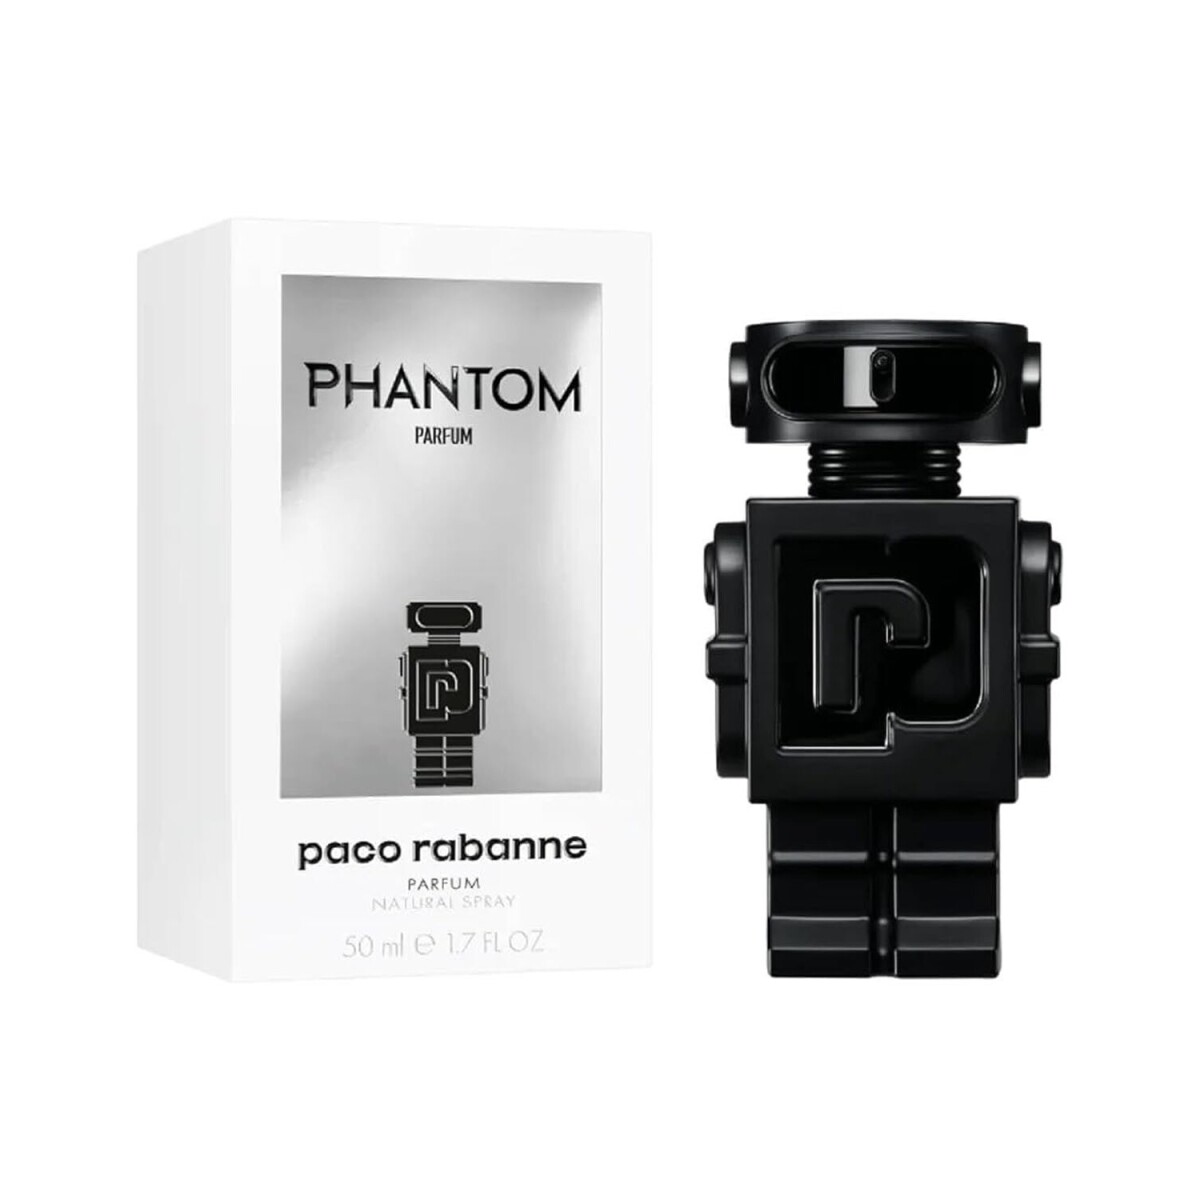 Perfume Paco Rabanne Phantom Parfum 50ml Original 